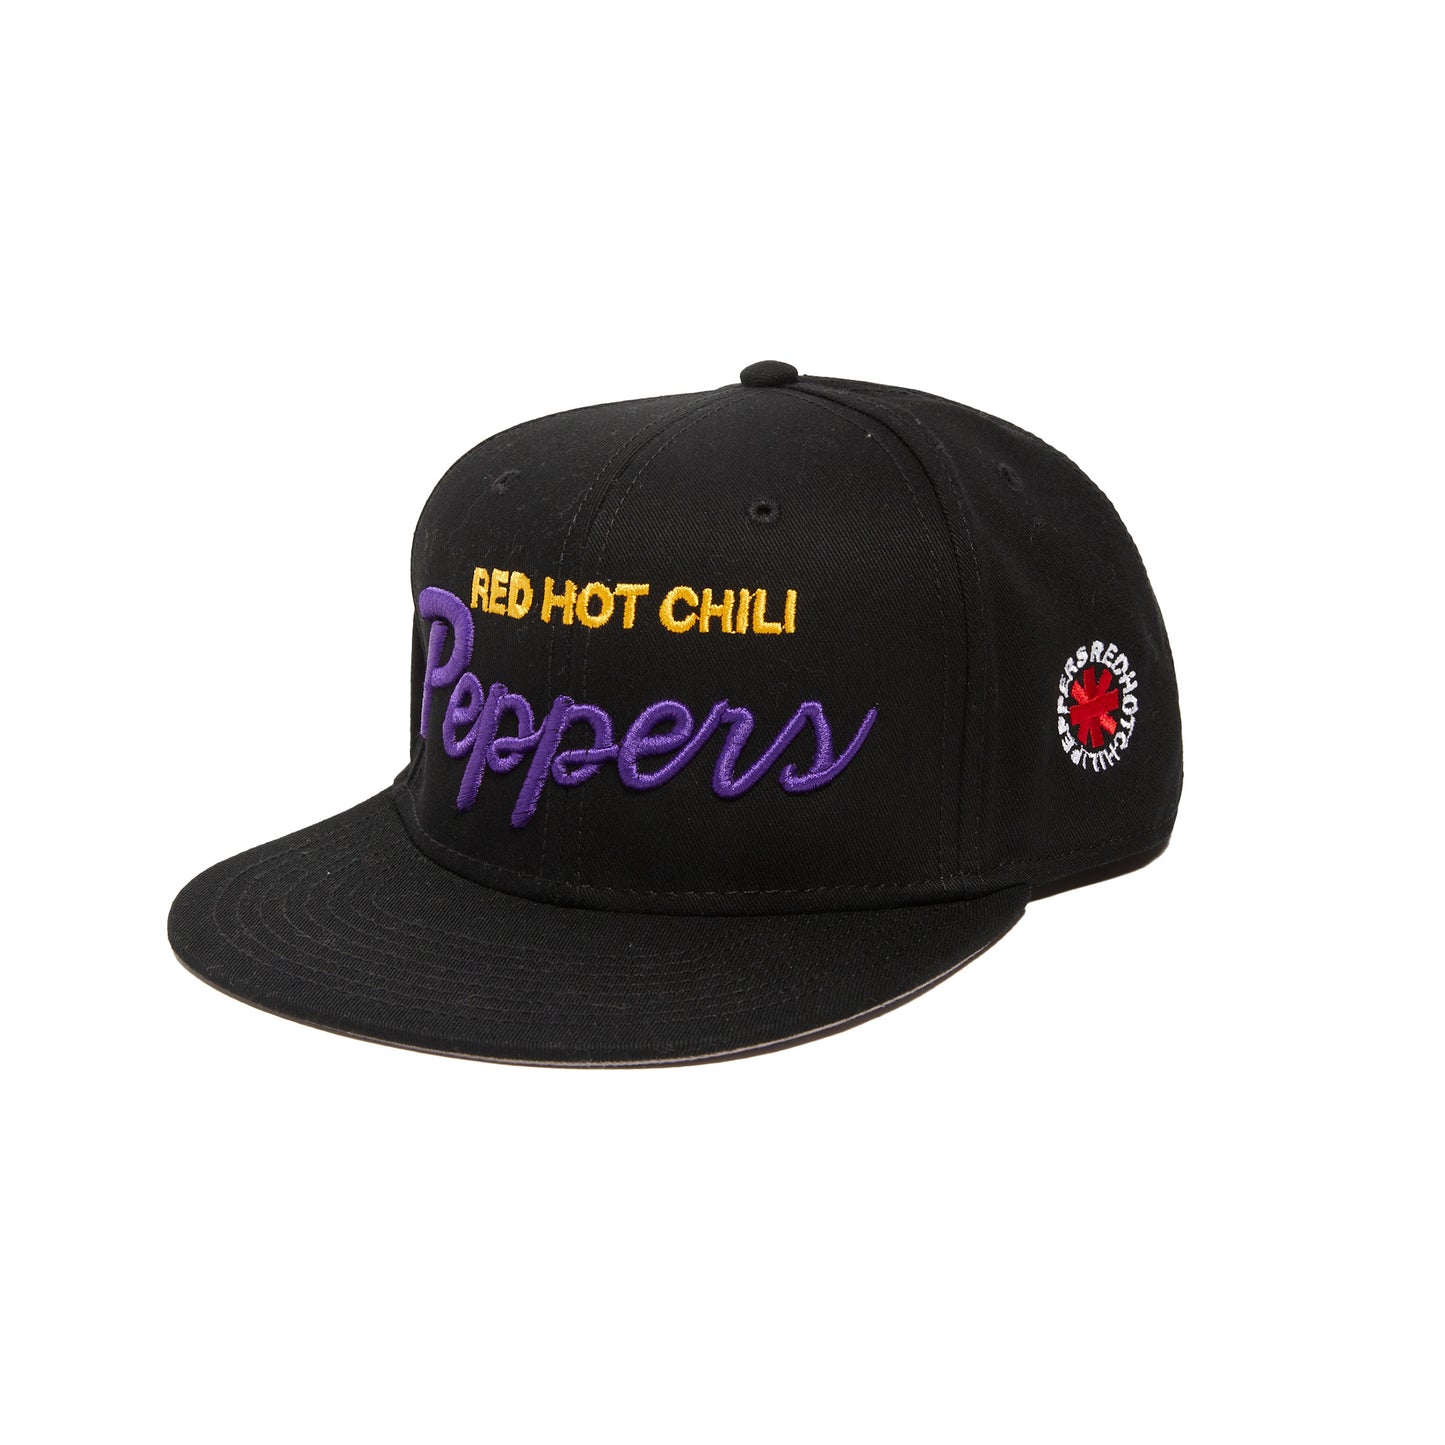 Peppers Snapback Hat - Black